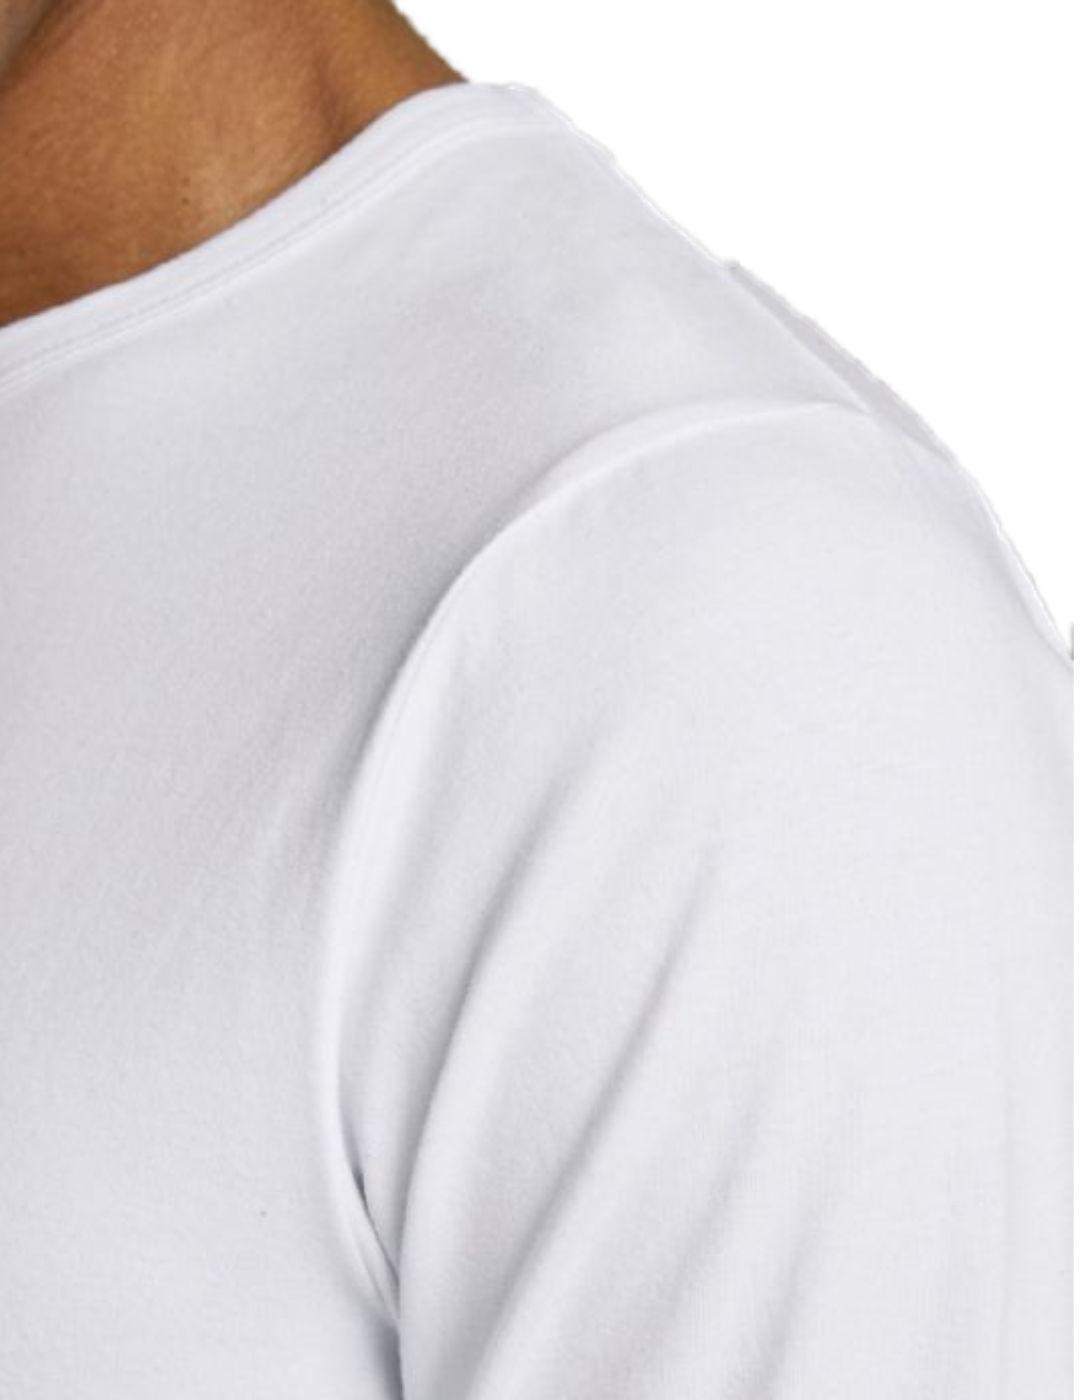 Camiseta Jack&jones Basic blanca basica manga larga  hombre